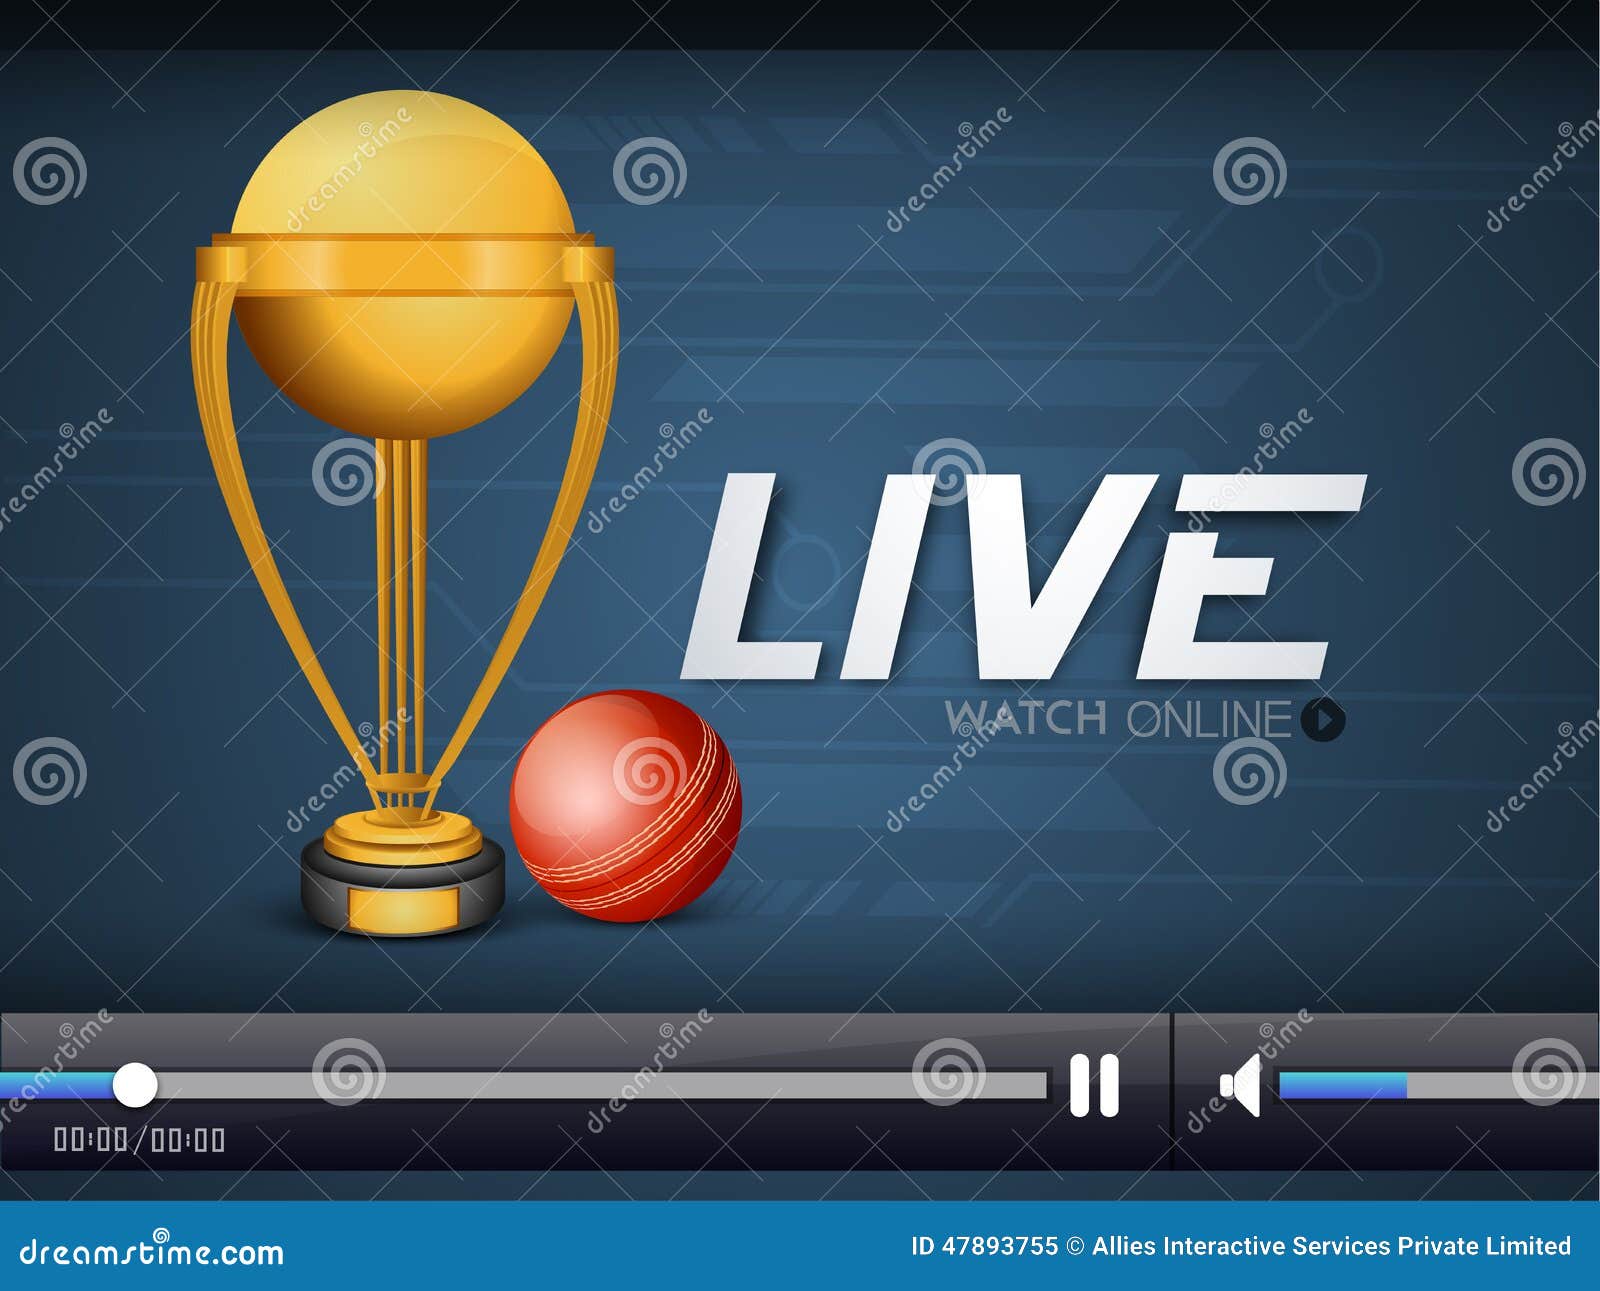 live cricket score video